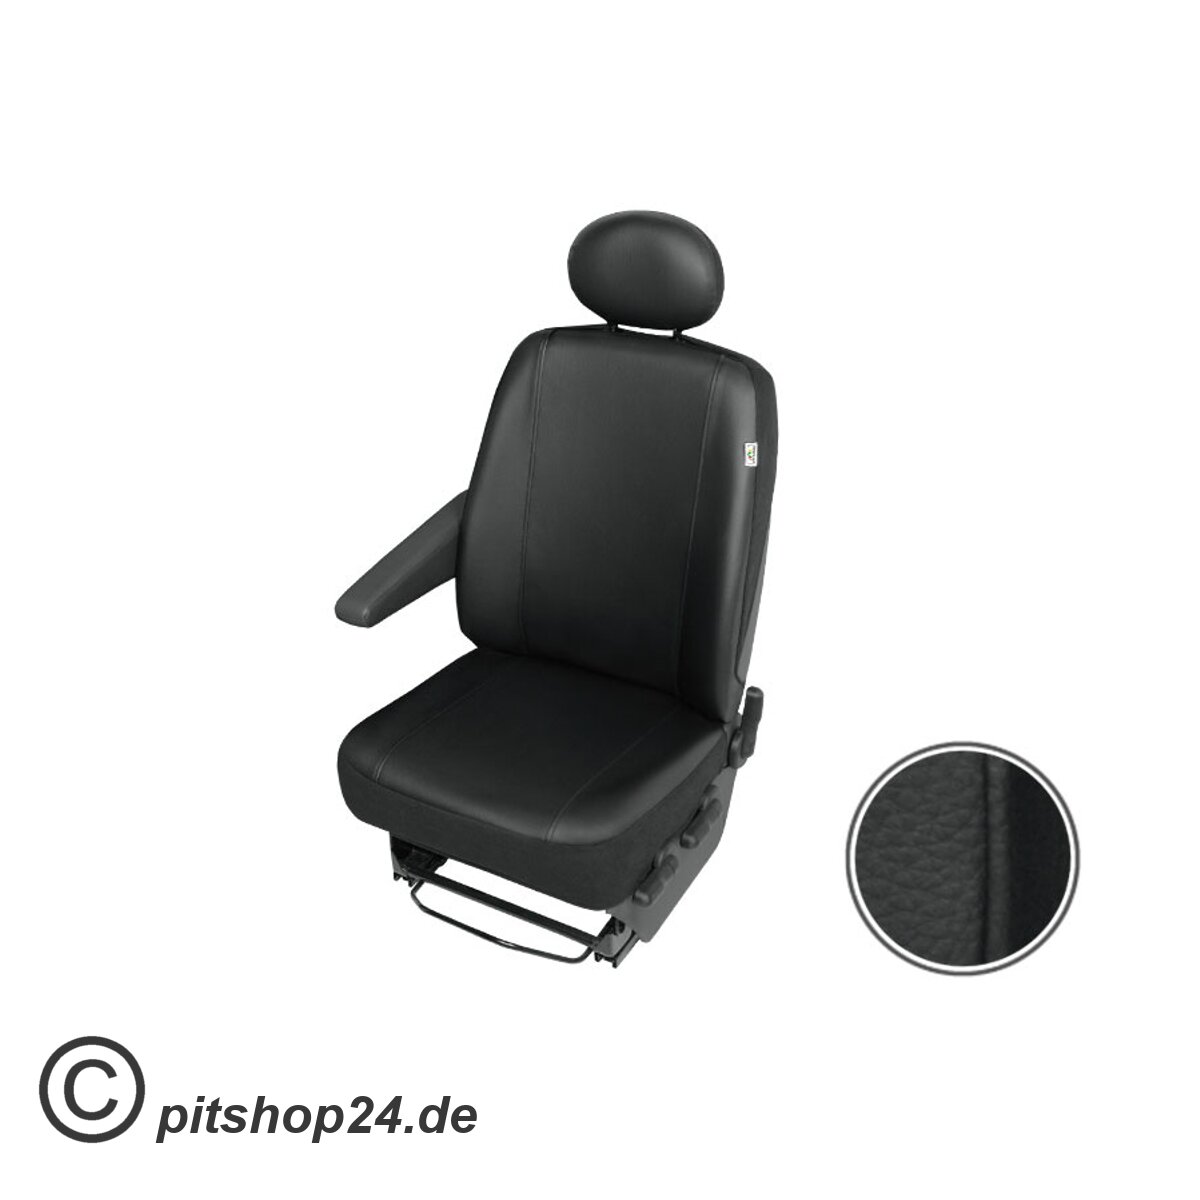 https://pitshop24.de/media/image/product/305/lg/toyota-hiace-kunstleder-einzelsitzbezug-practical.jpg